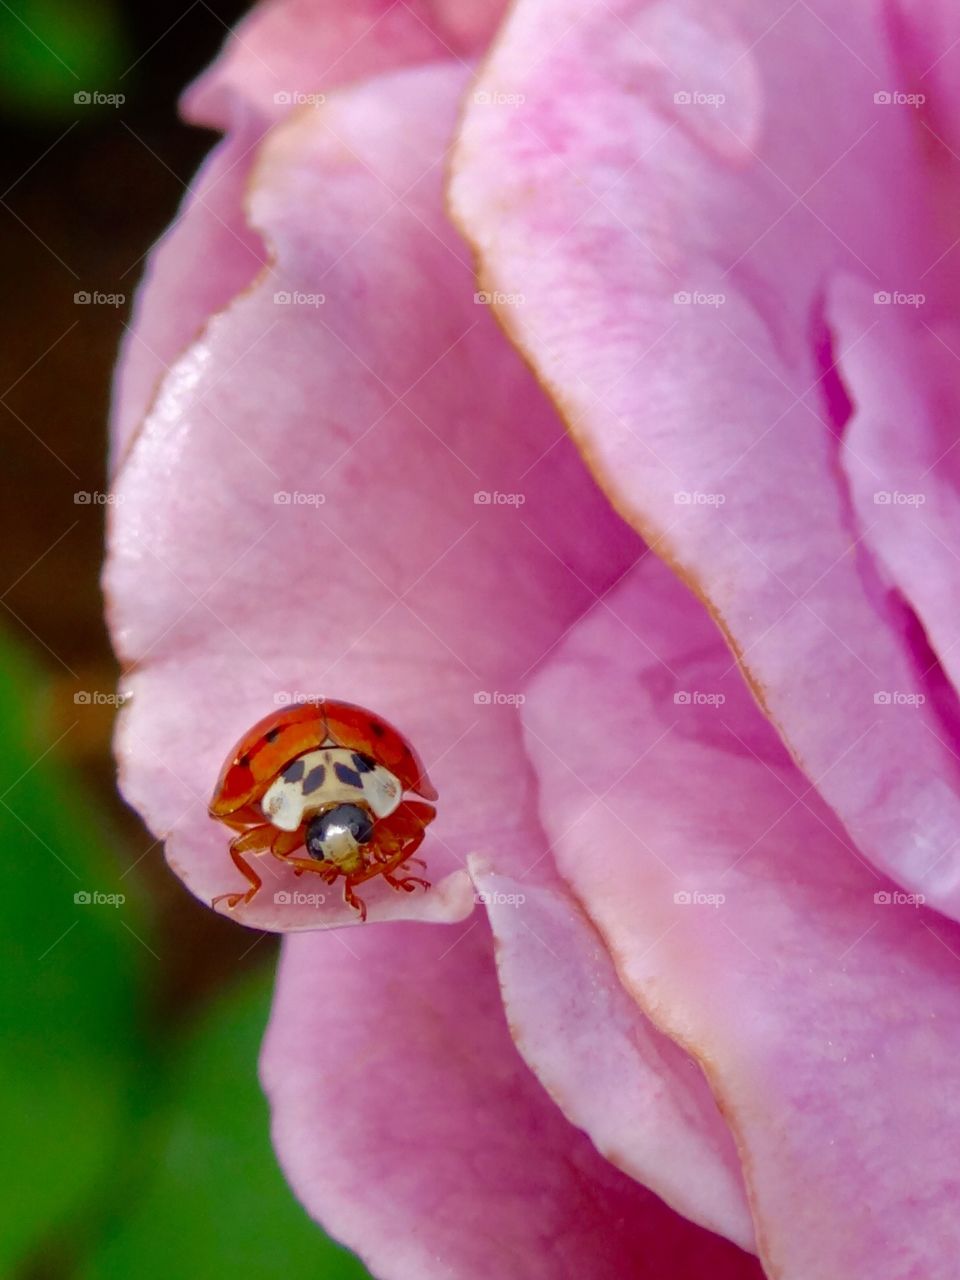 smiling ladybug on rose. Ladybug smiling happily white walking along a purple rose petal. Such a cute face!